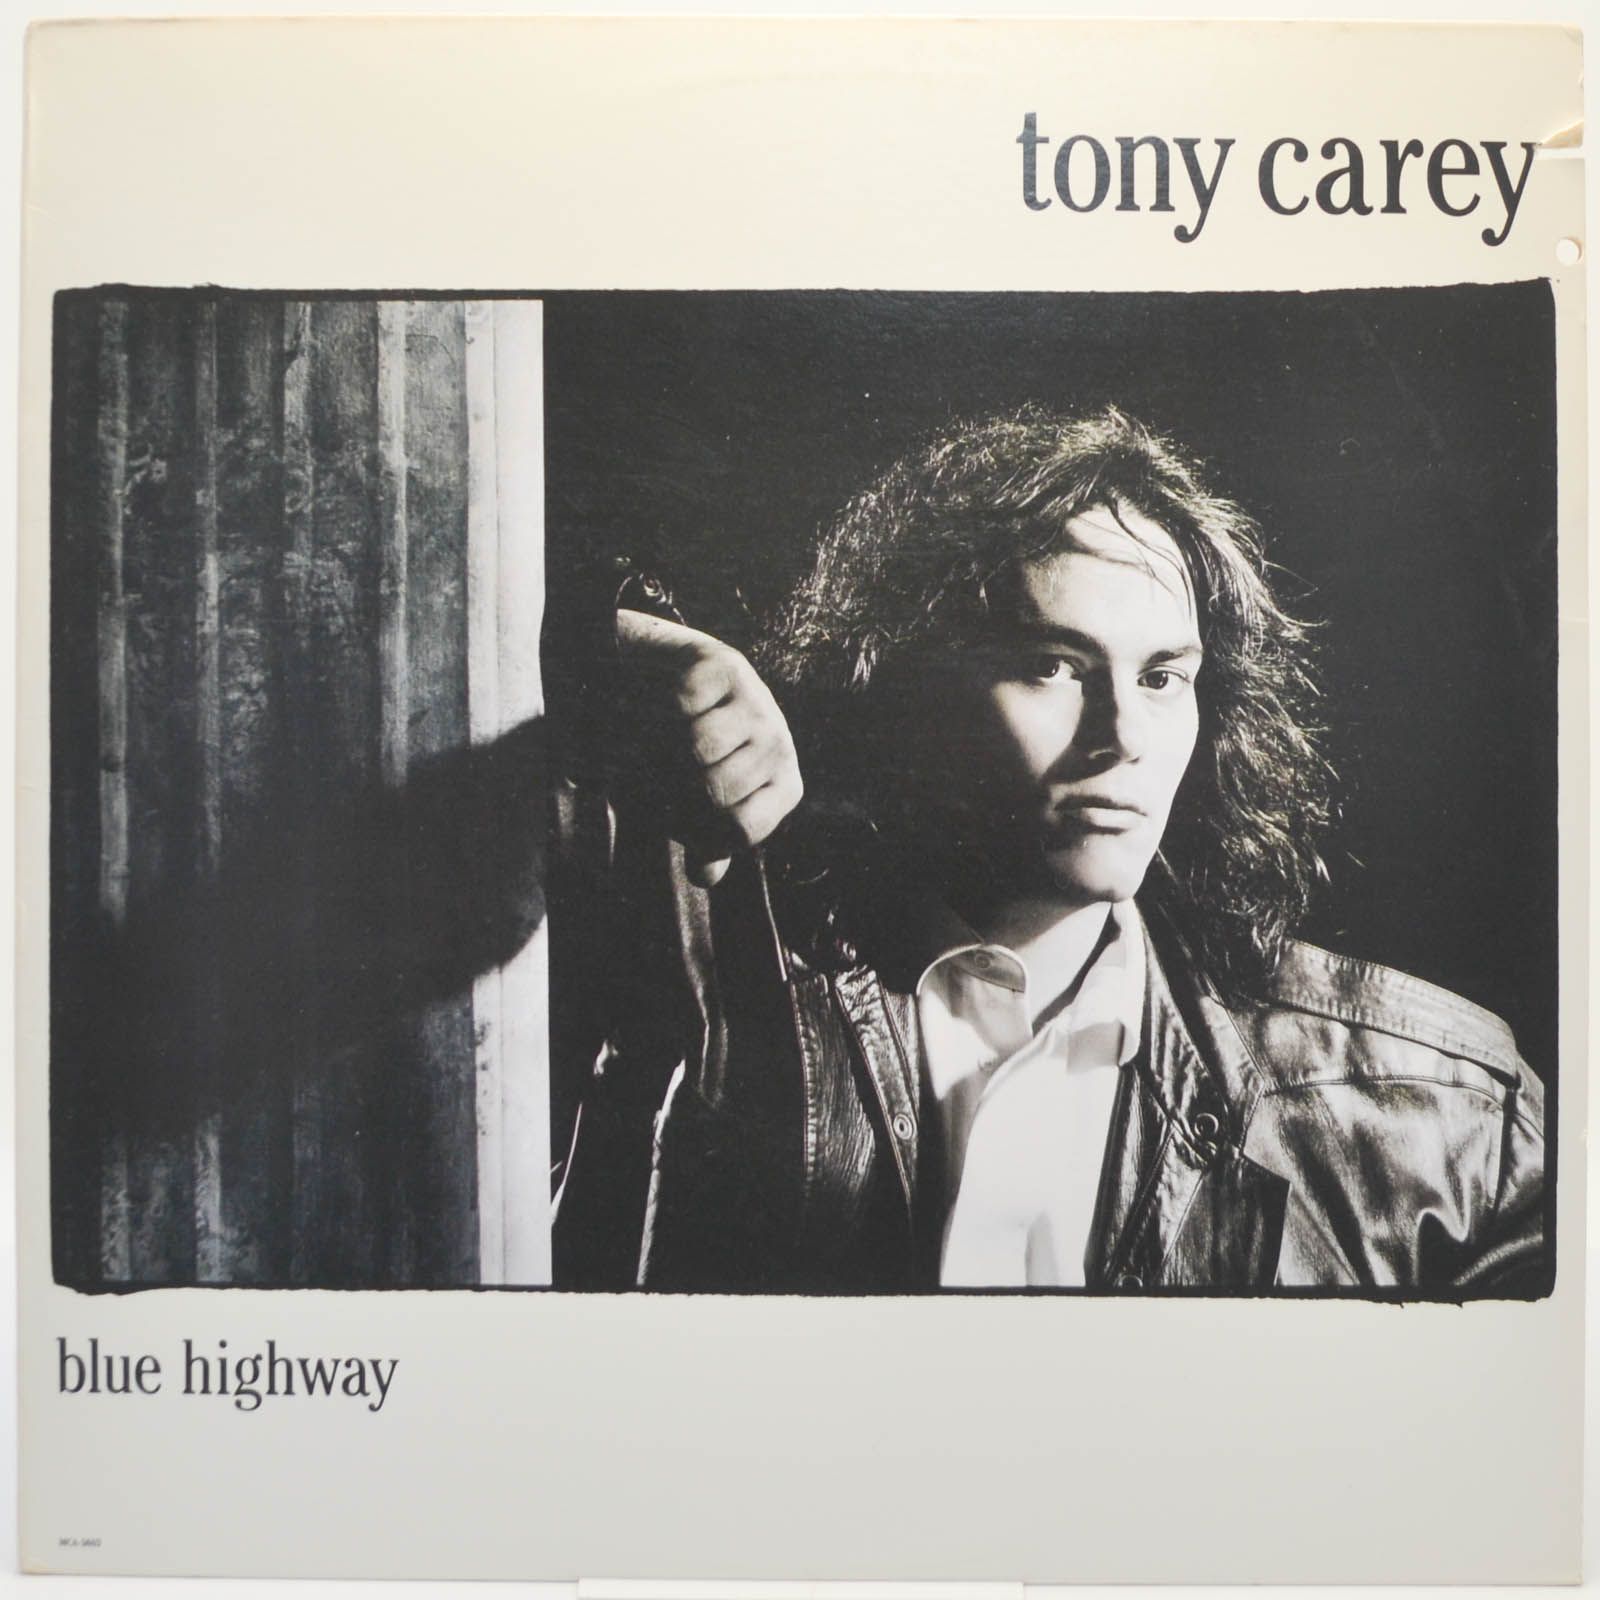 Tony Carey — Blue Highway (USA), 1985